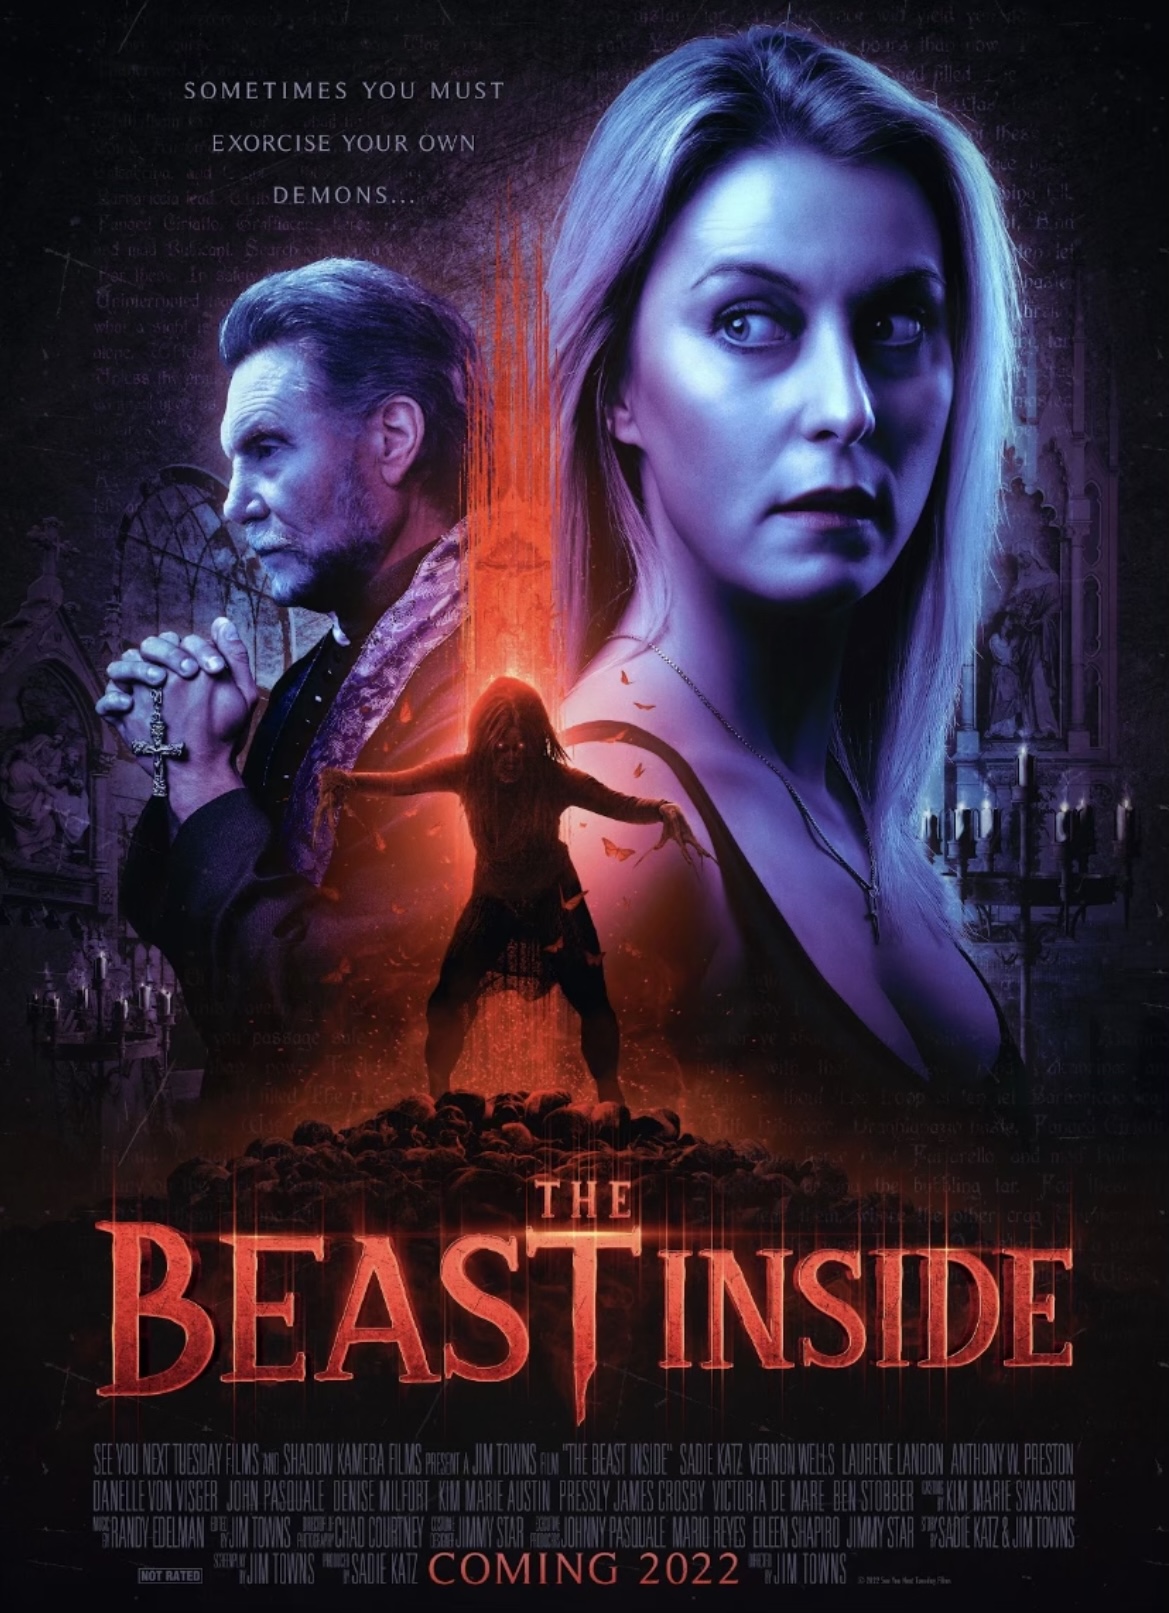 World Renowned Film Composer Randy Edelman Set to Score New Horror Thriller  "The Beast Inside"